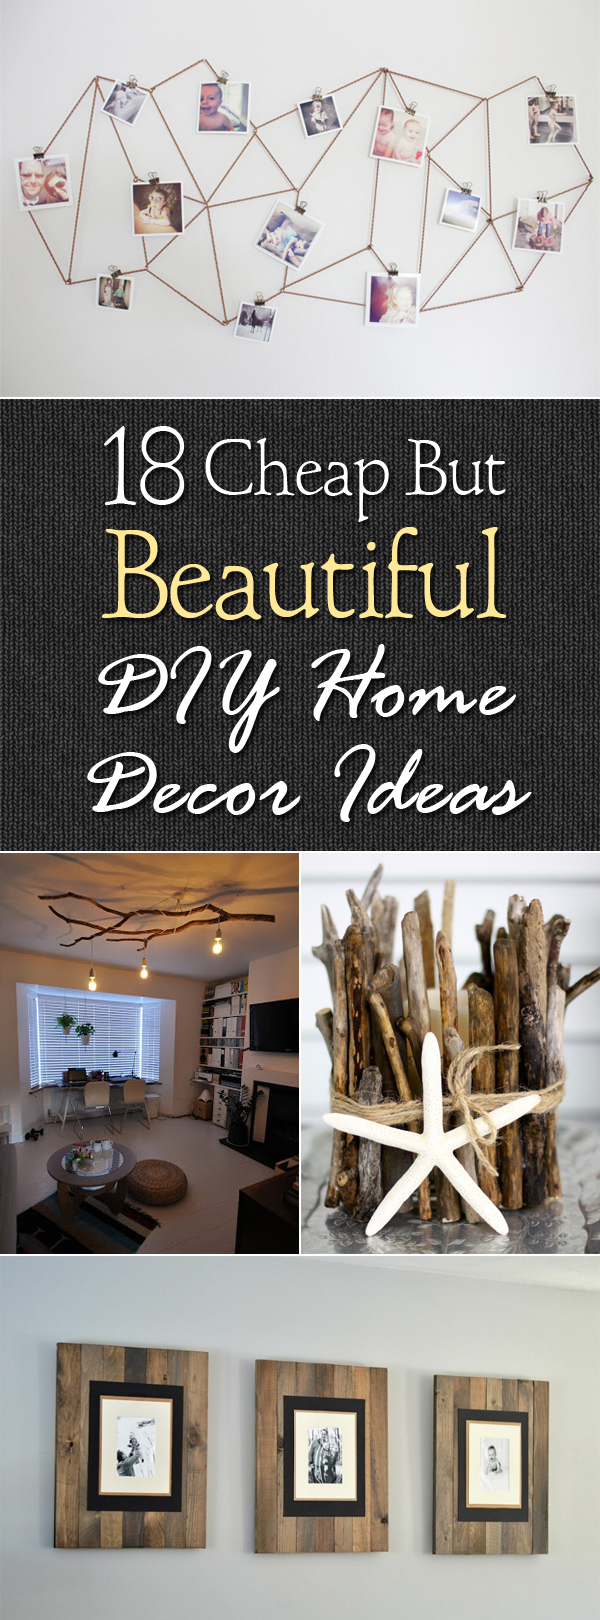 18 Cheap But Beautiful DIY Home Decor Ideas